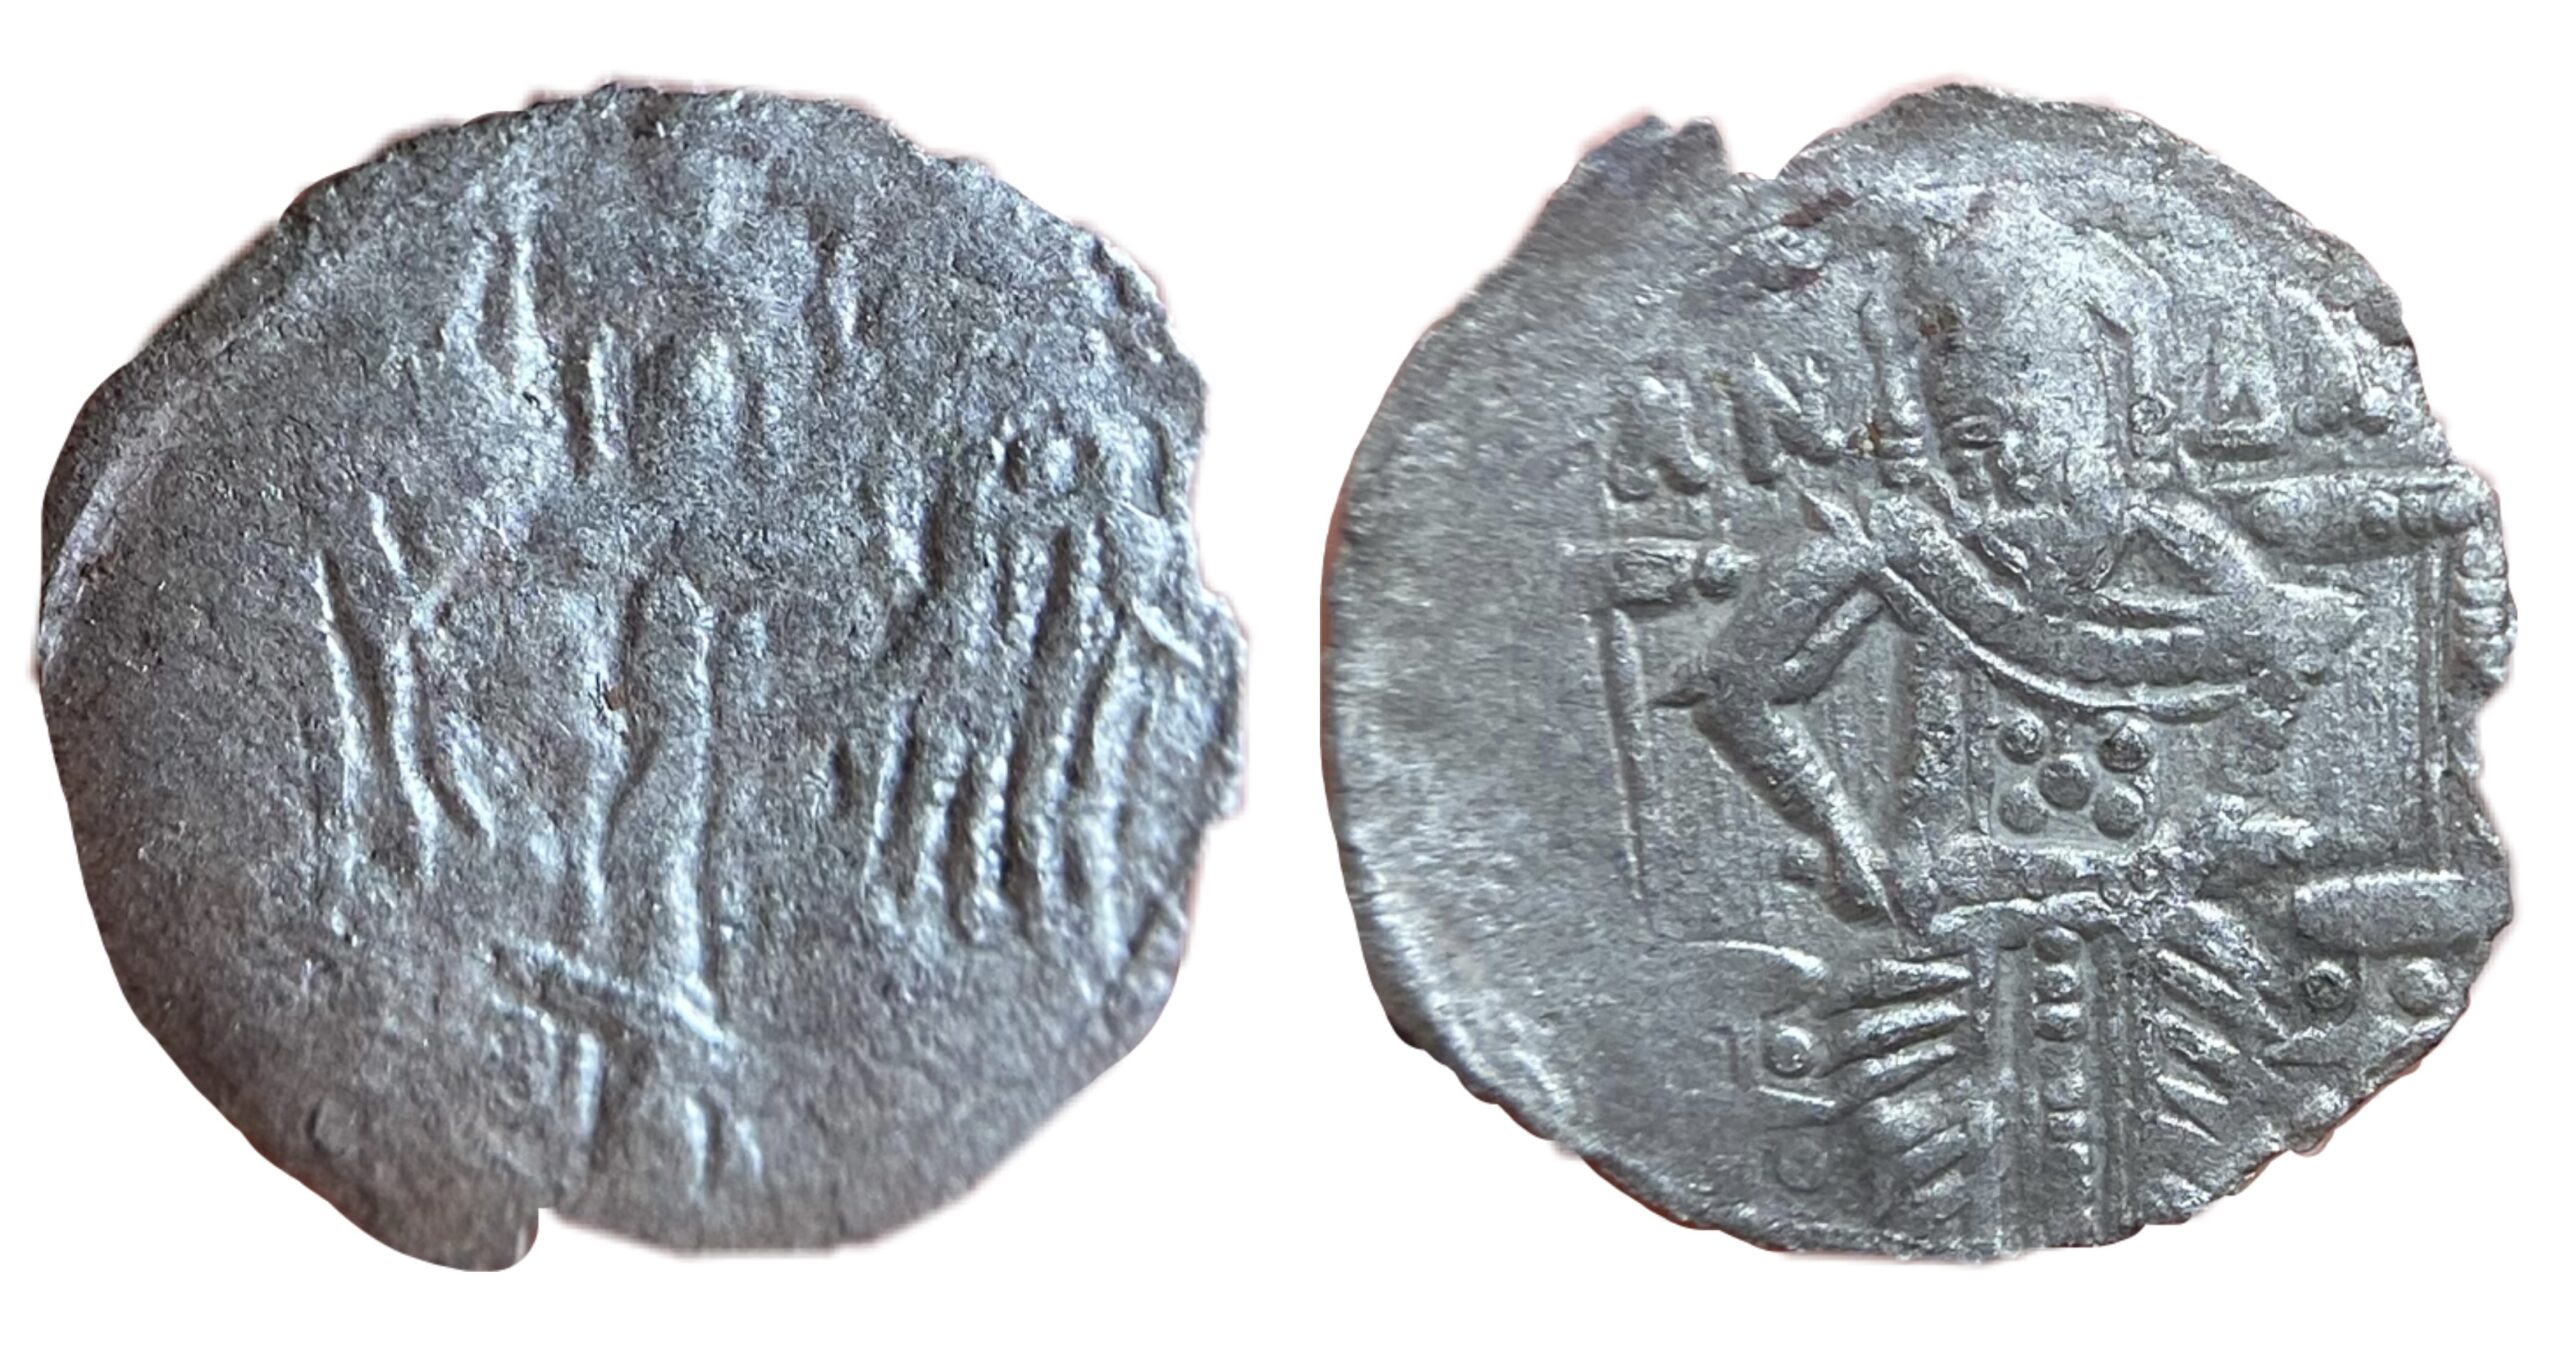 Silver/Billon Tornese of Andronikos II-image